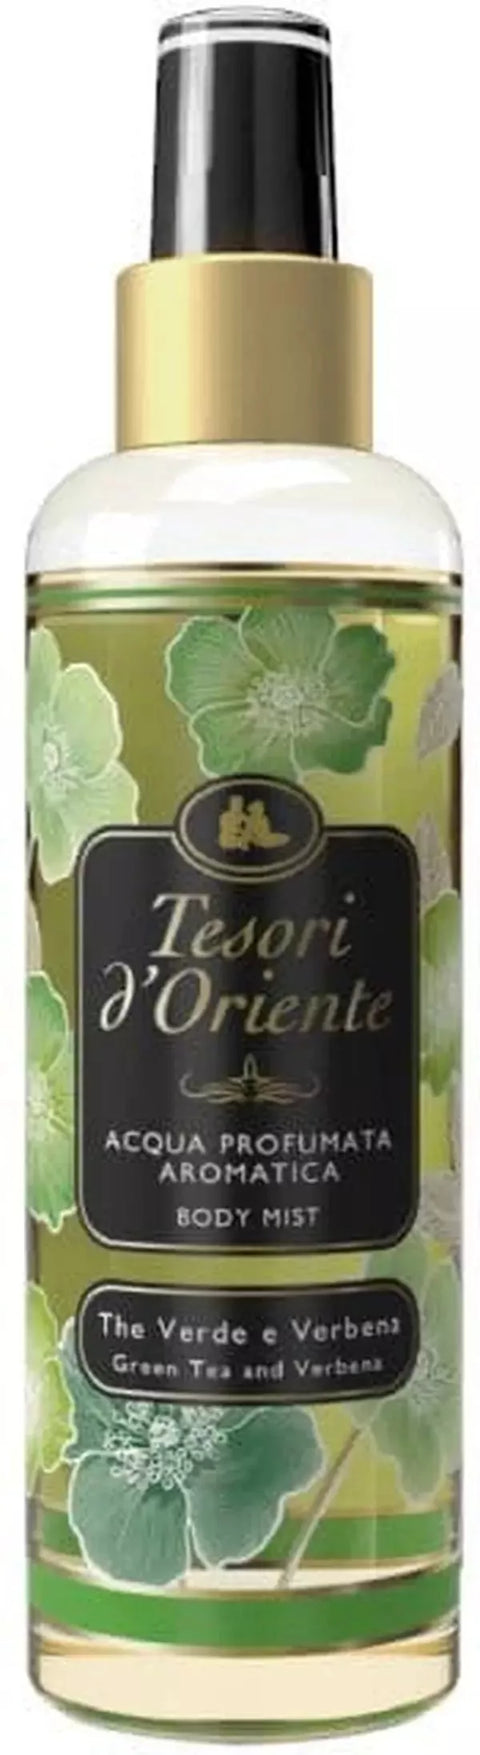 Tesori d'oriente bodymist en parfum Groene thee en verbena - Hemelse-geuren.nl